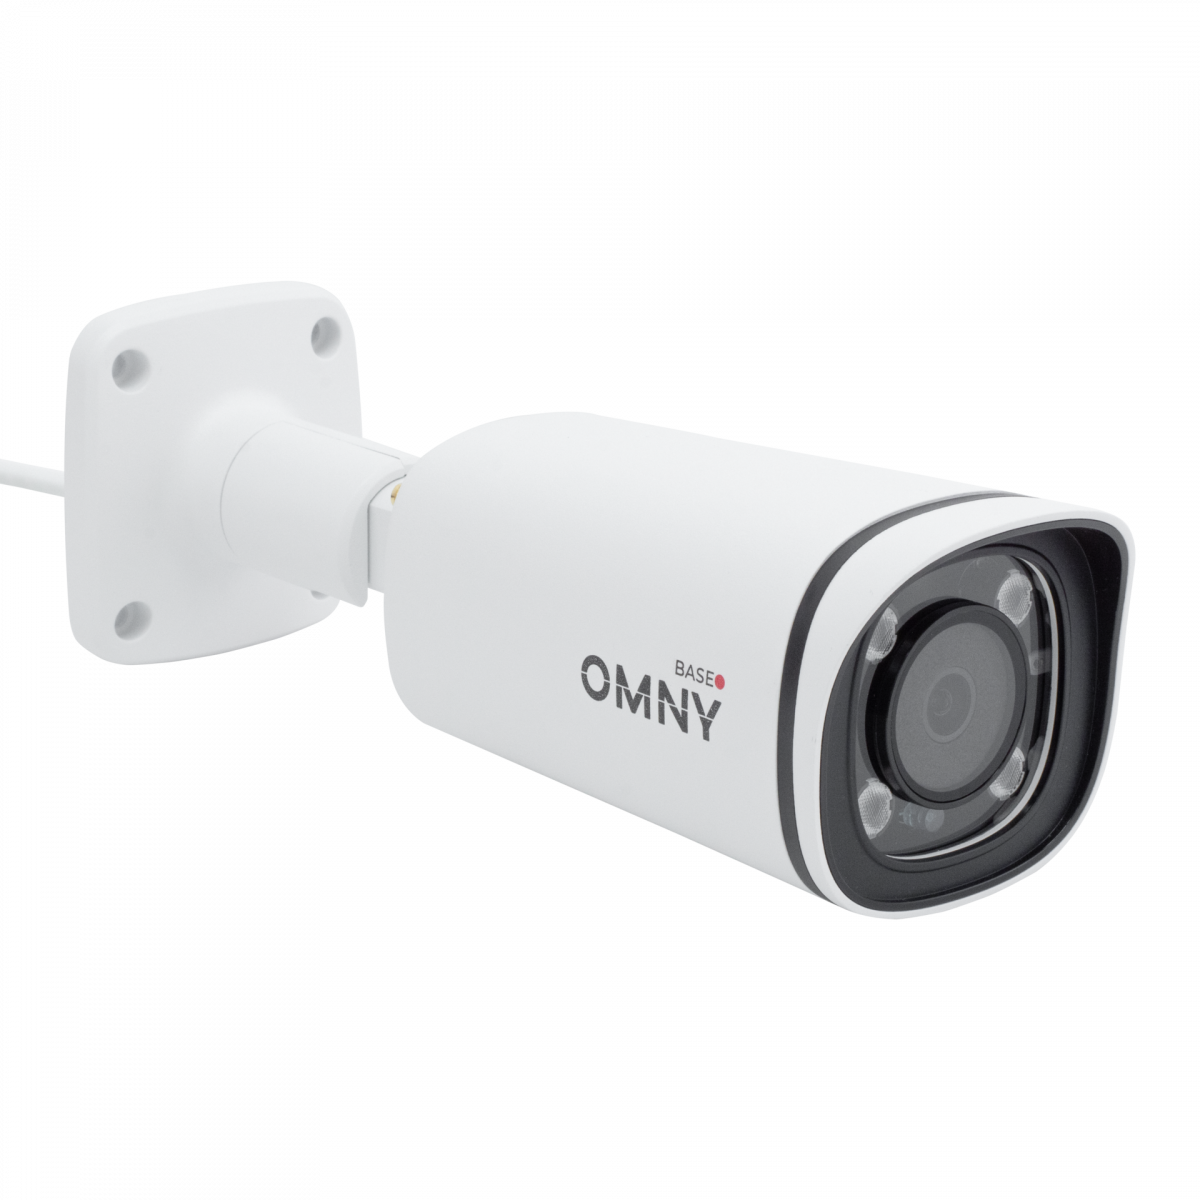 Камера сетевая буллет 5Мп OMNY BASE miniBullet5E-WDS-LTE-C 28 с поддержкой LTE